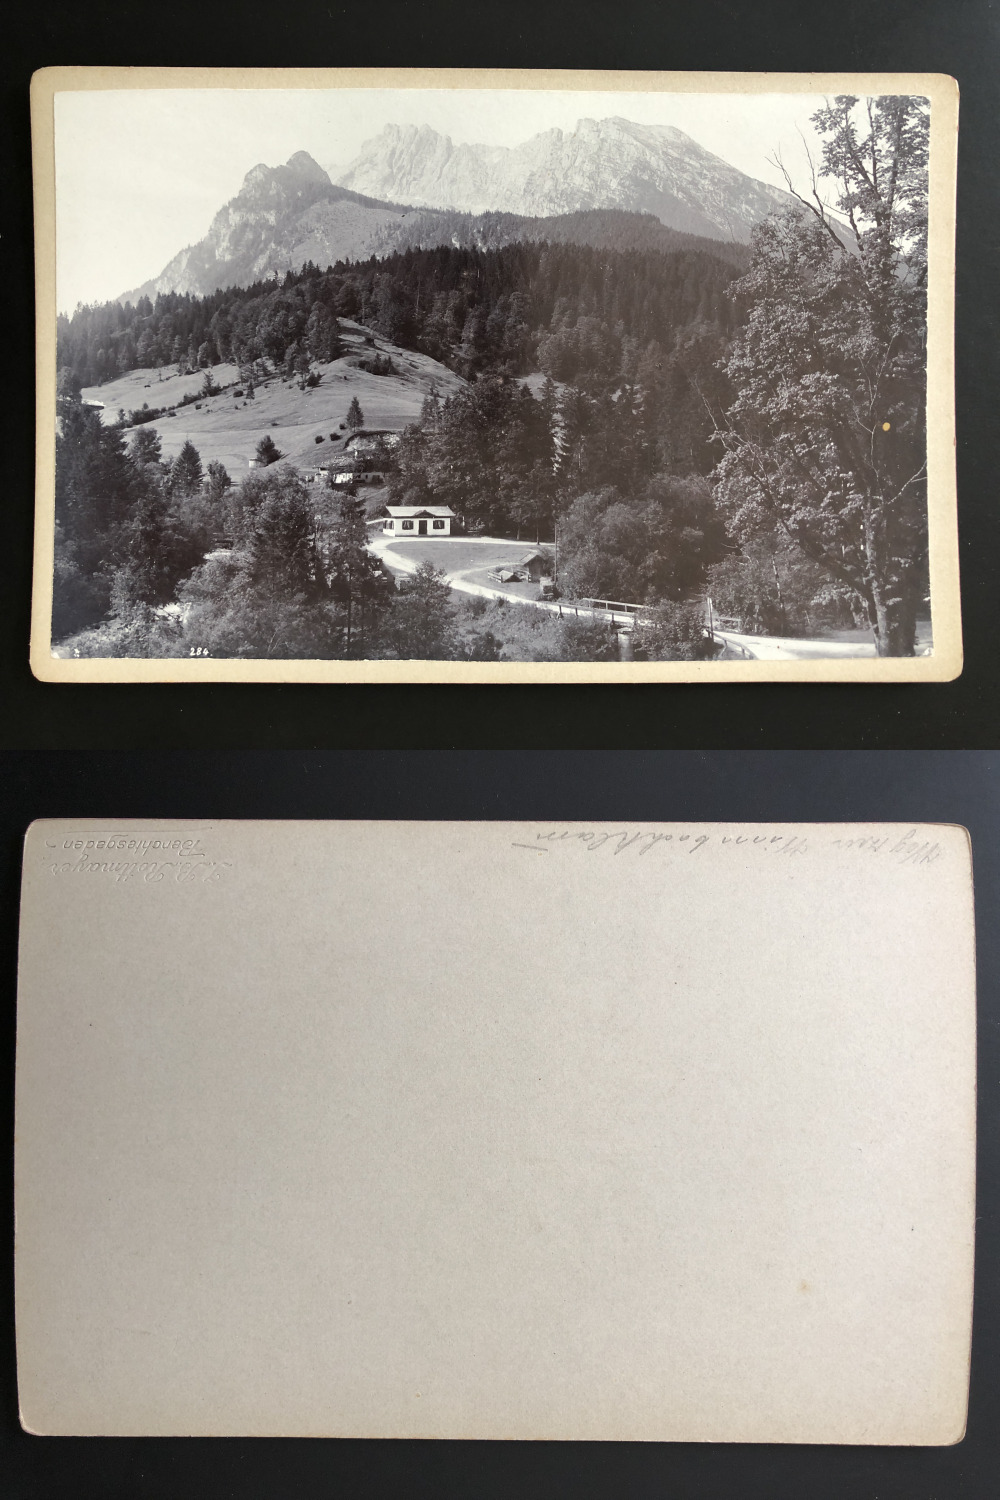 Rottmayer, Germany, Berchtesgaden, Wimbachklamm vintage silver print, map 